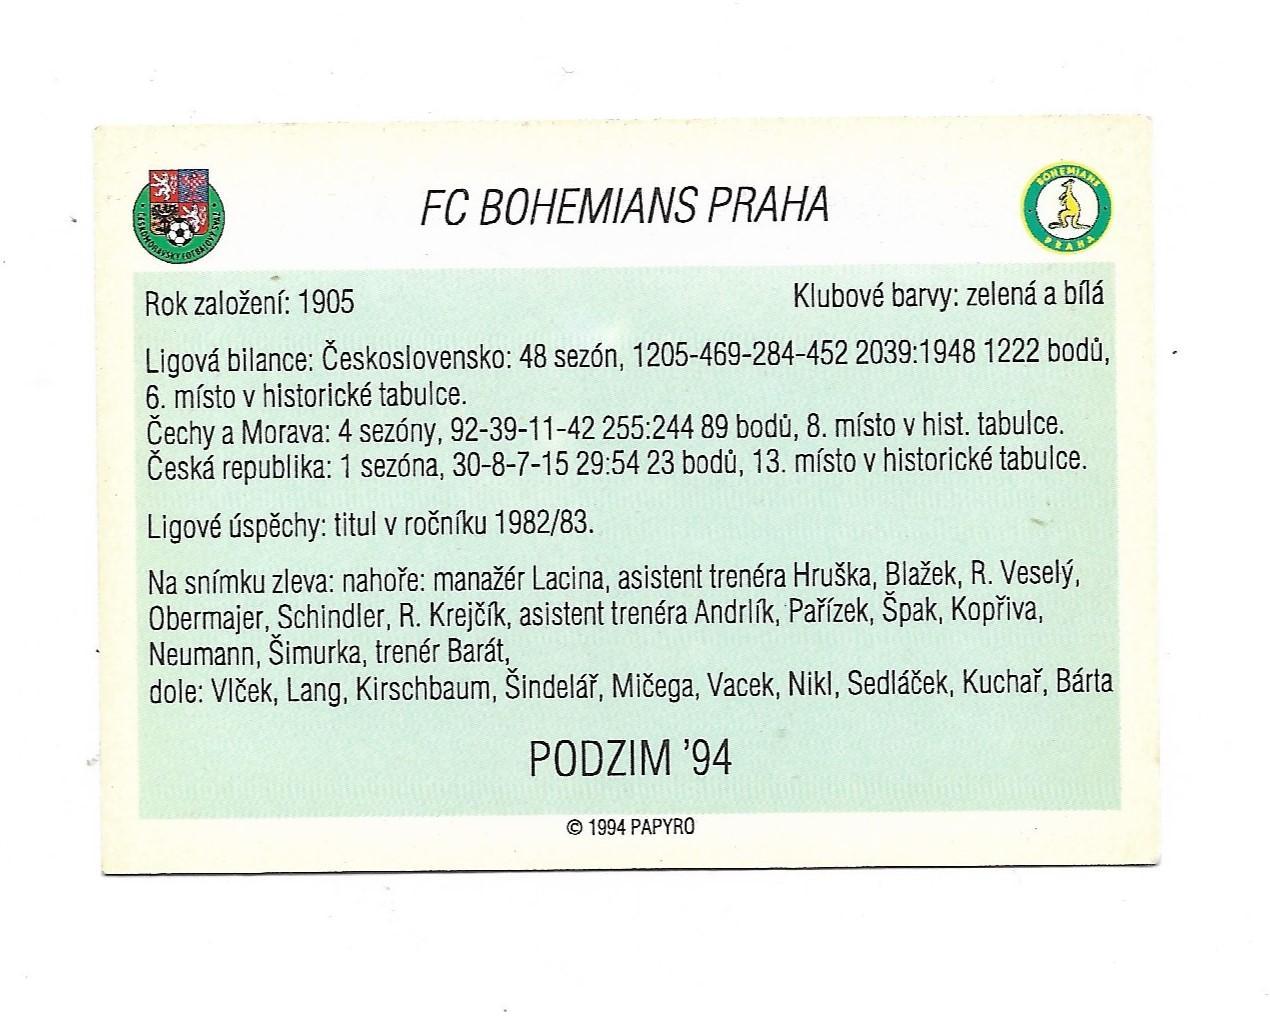 карточкa_FC_BOHEMIANS_ Praha_(PODZIM-94) 1